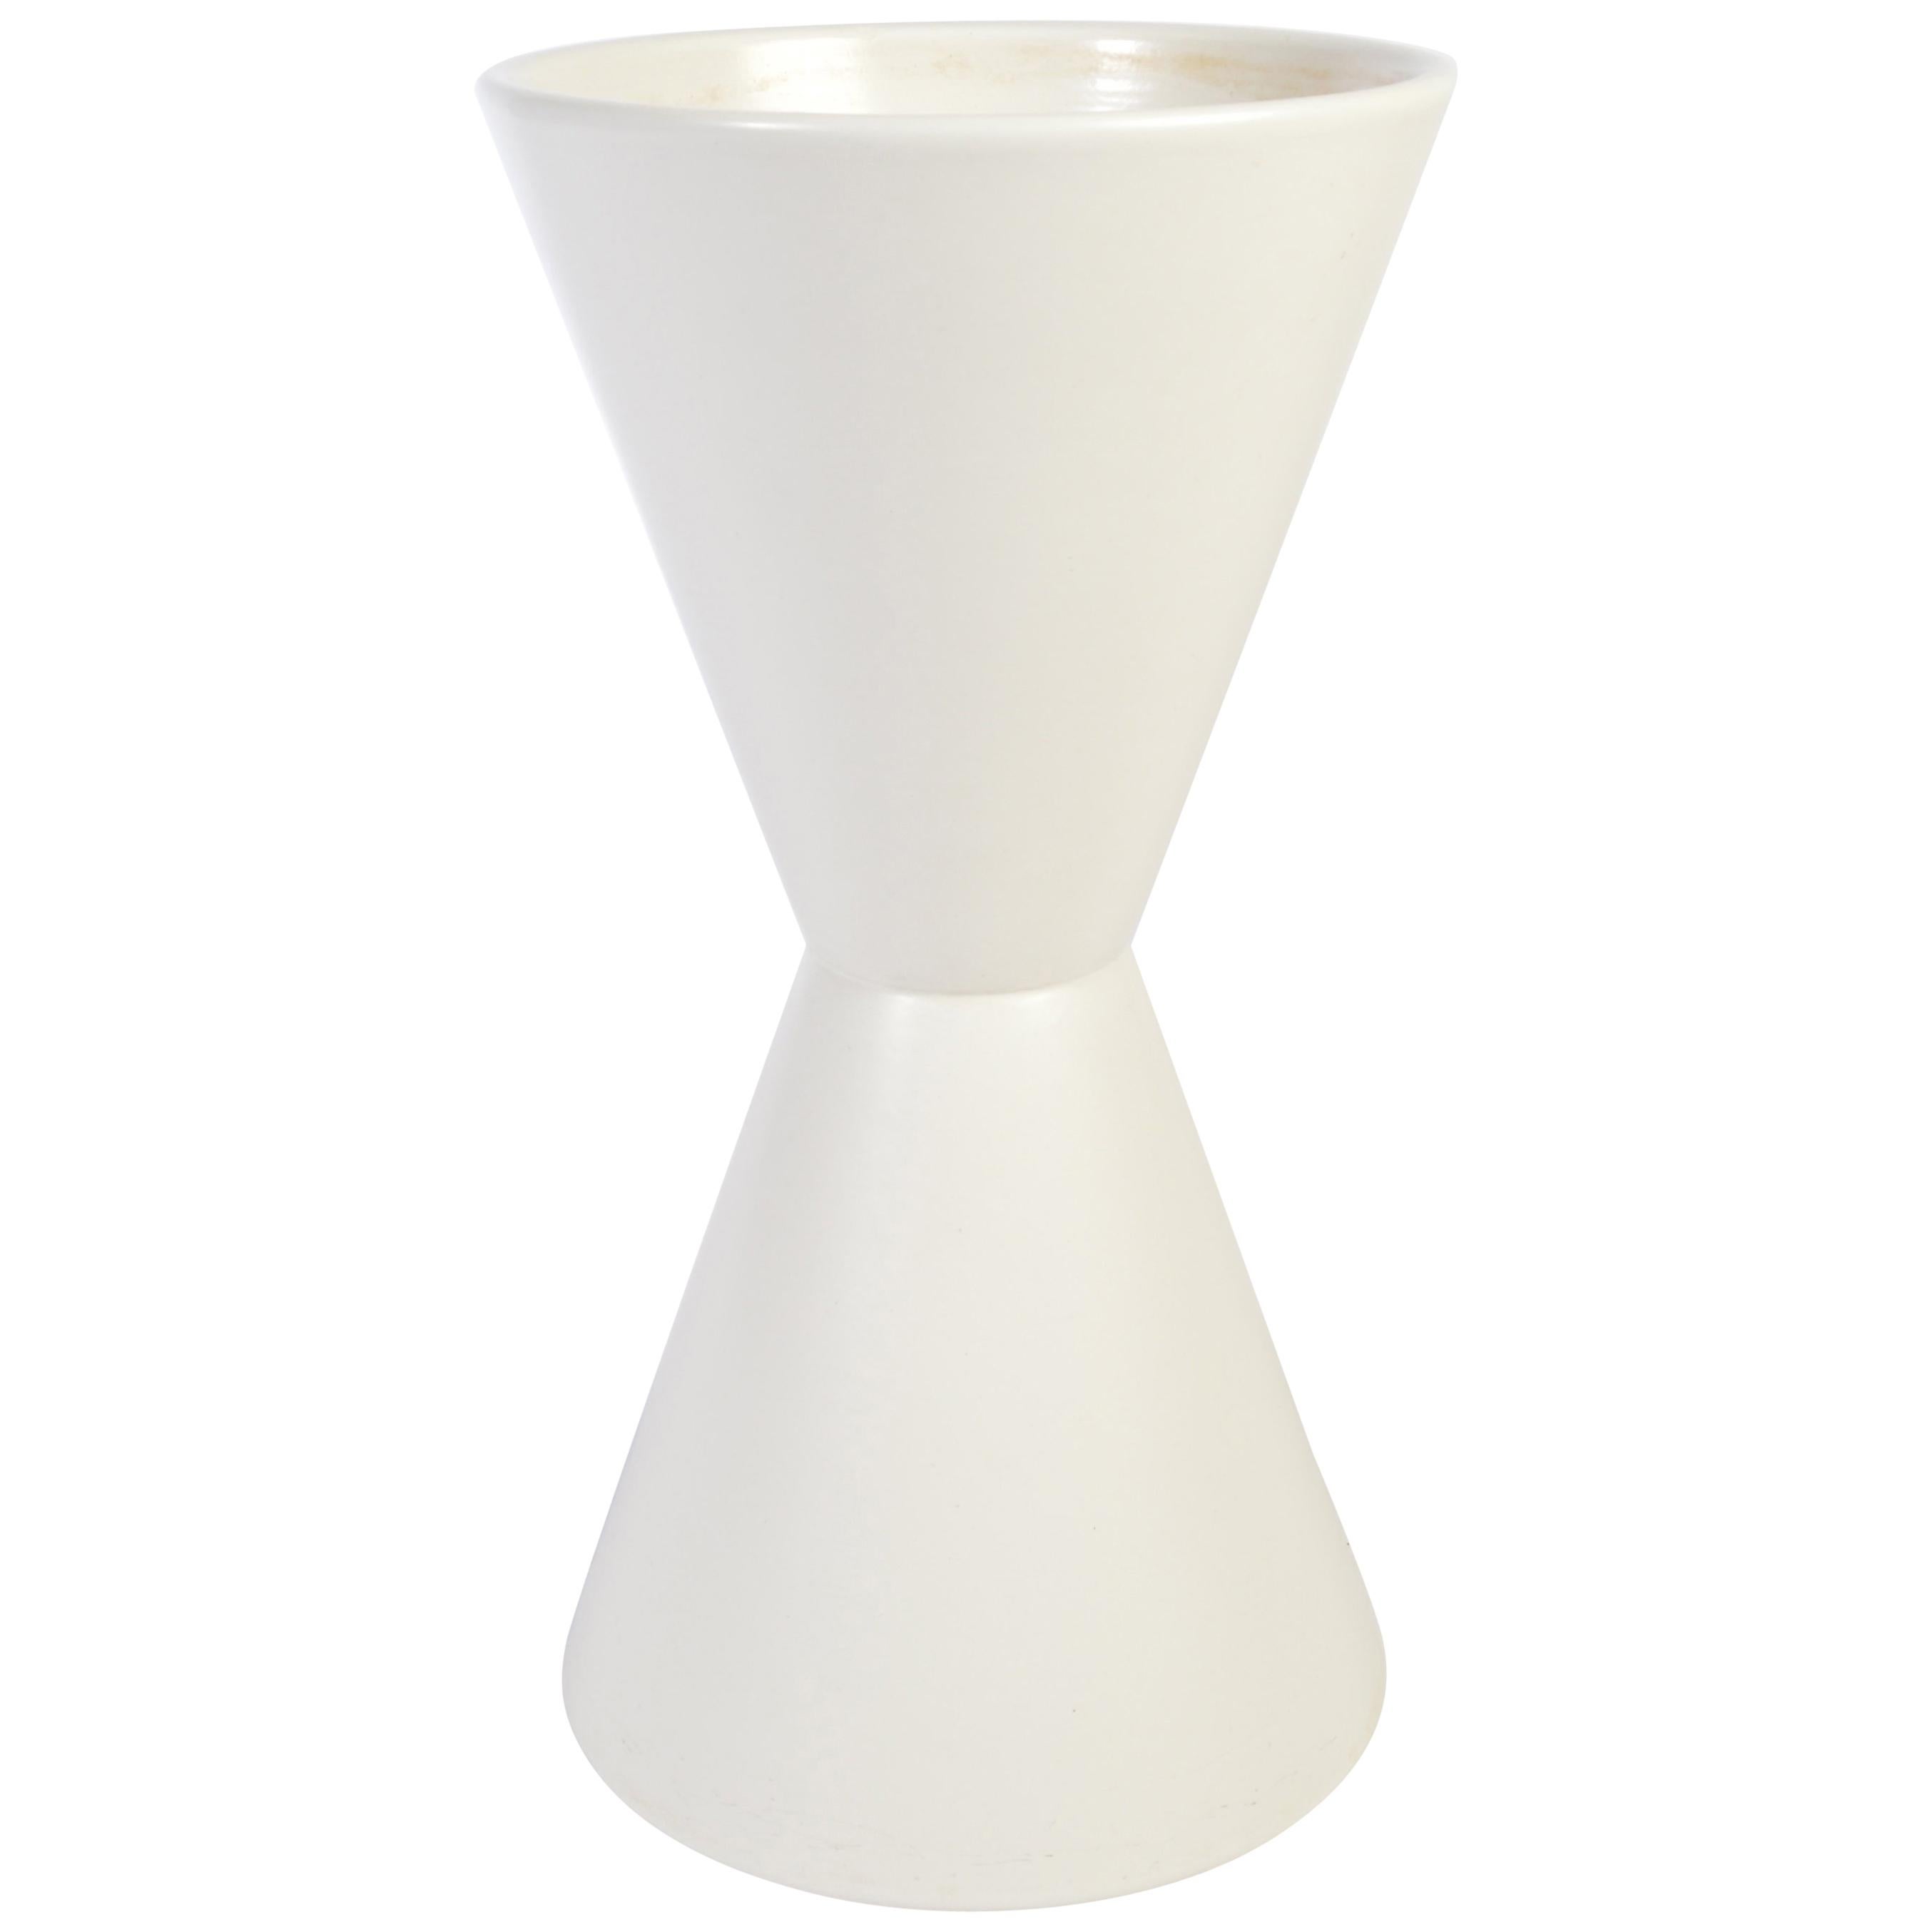 Lagardo Tackett for Architectural Pottery Double Cone Ceramic Pottery Planter